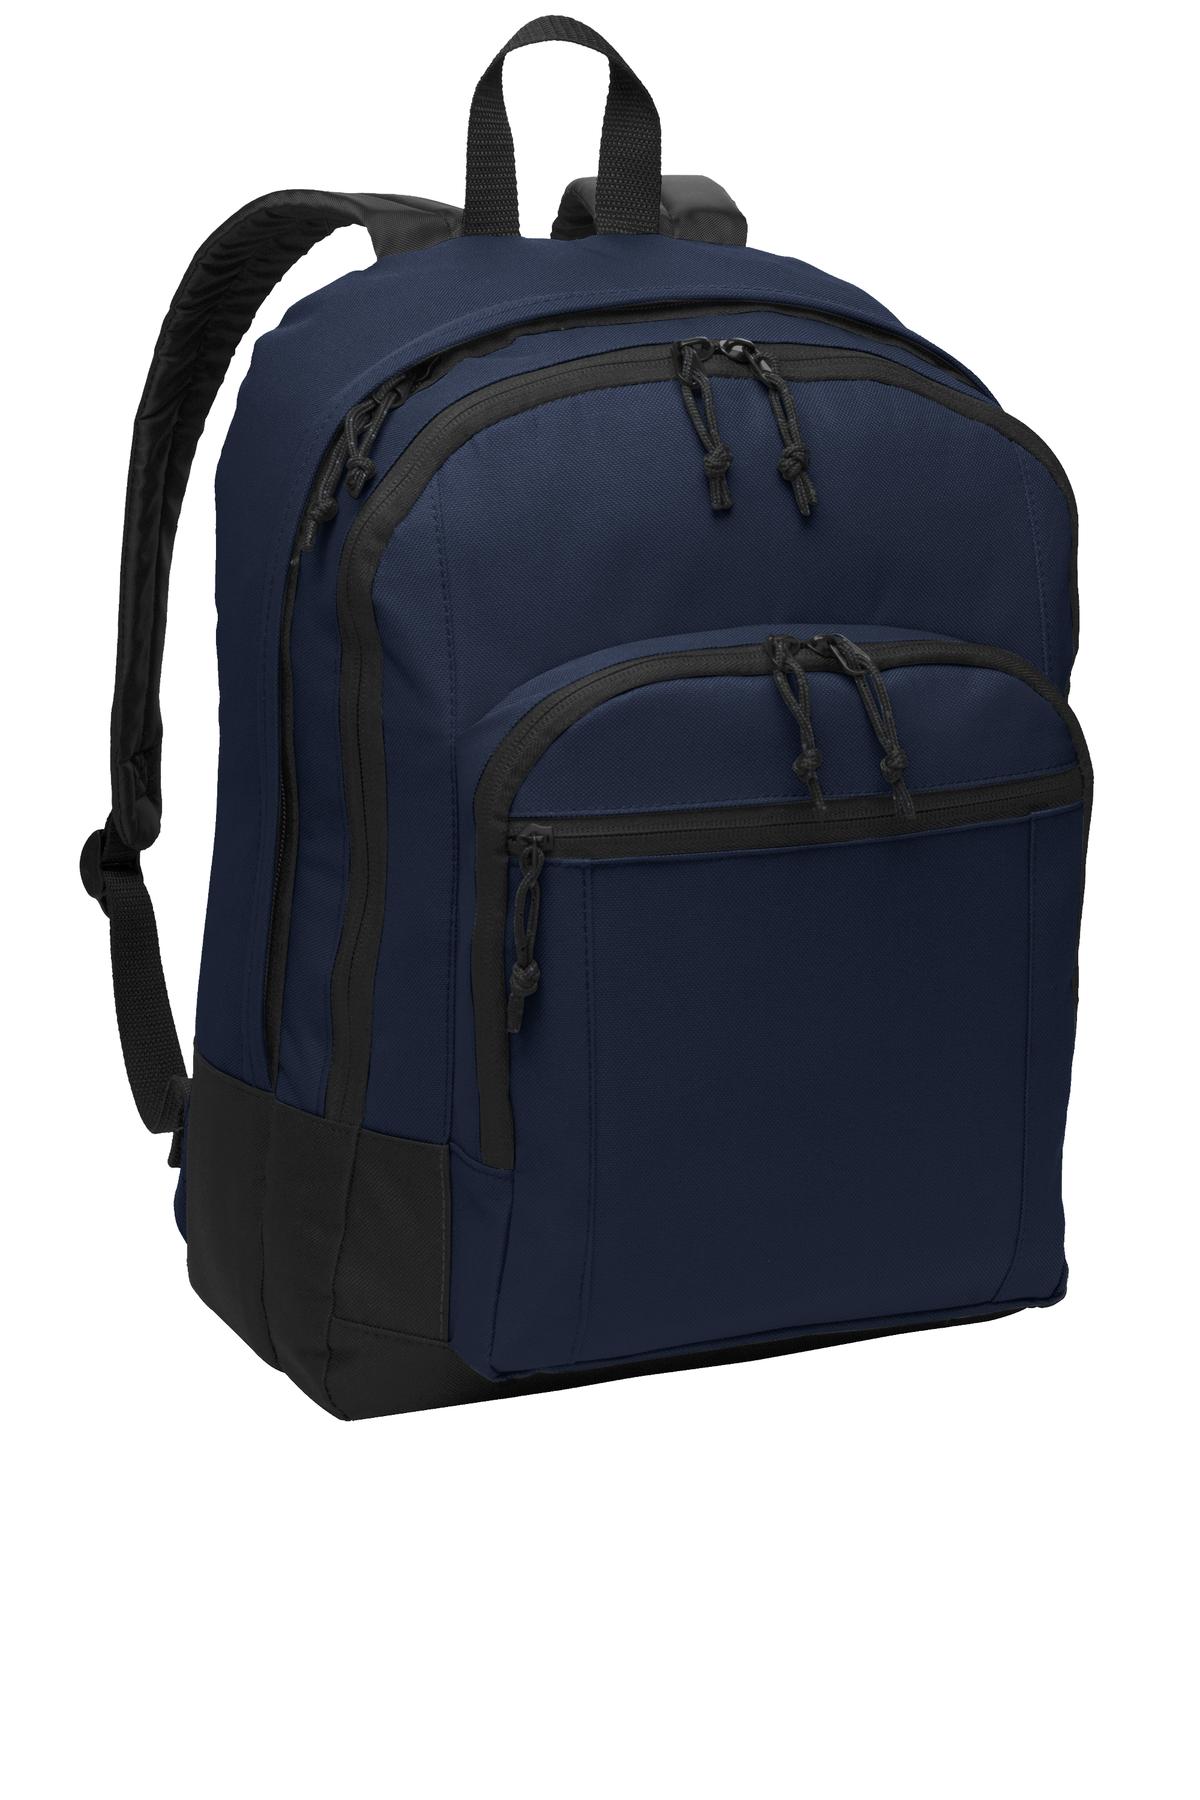 Basic Comfortable Backpack - image 1 of 2